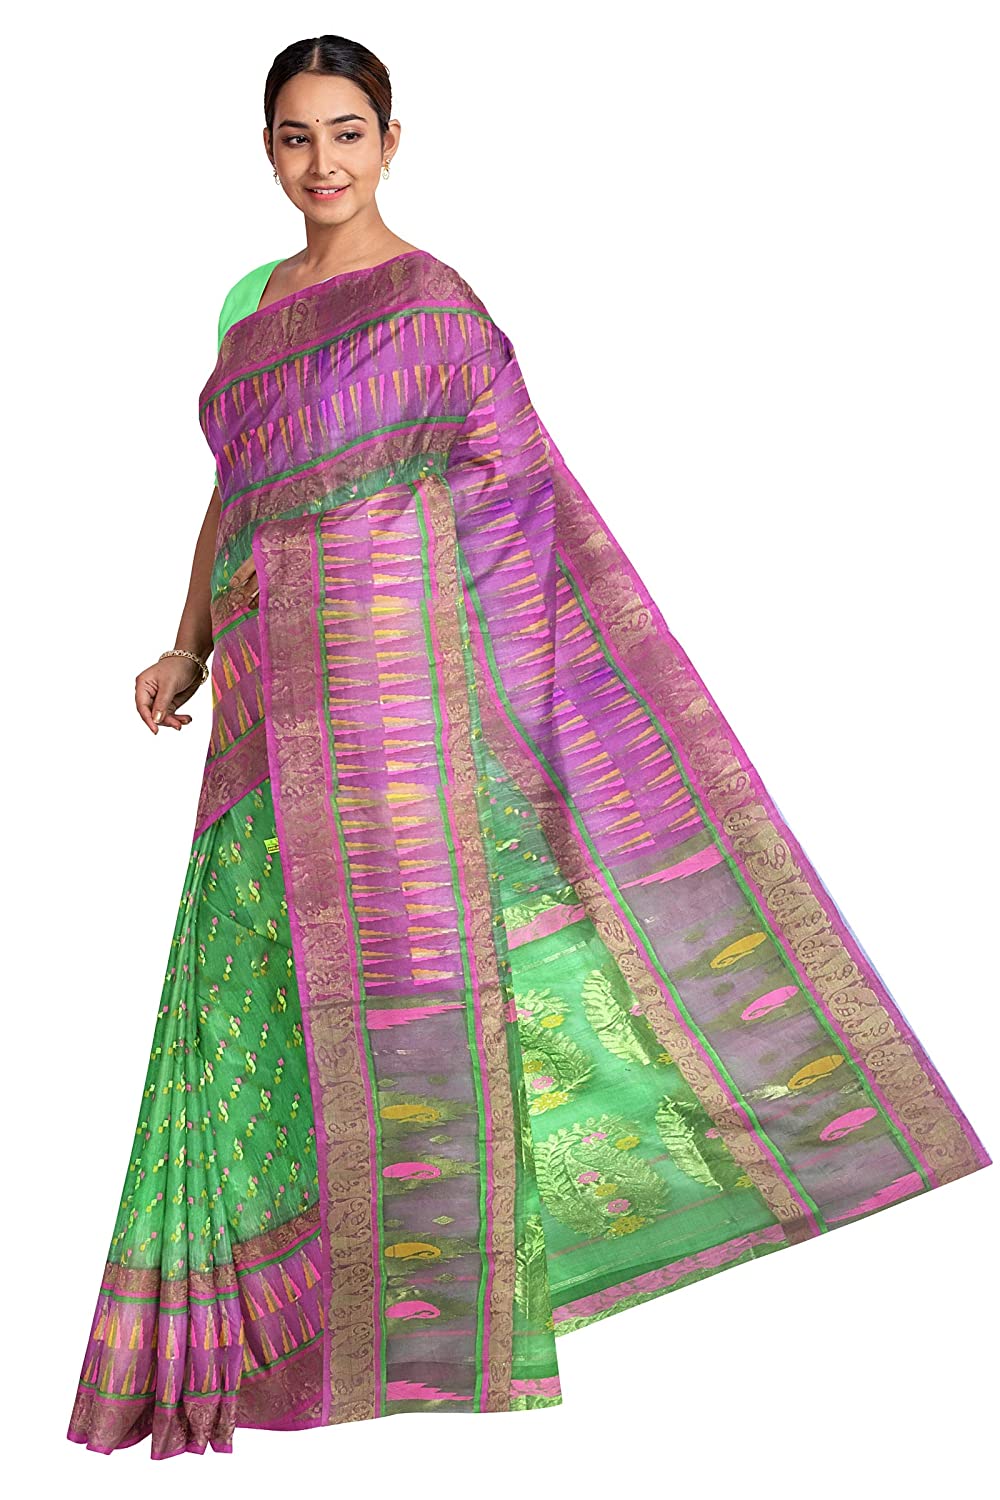 Pradip Fabrics Ethnic Women's All over Tant Jamdani Light Green and Pink Color Saree